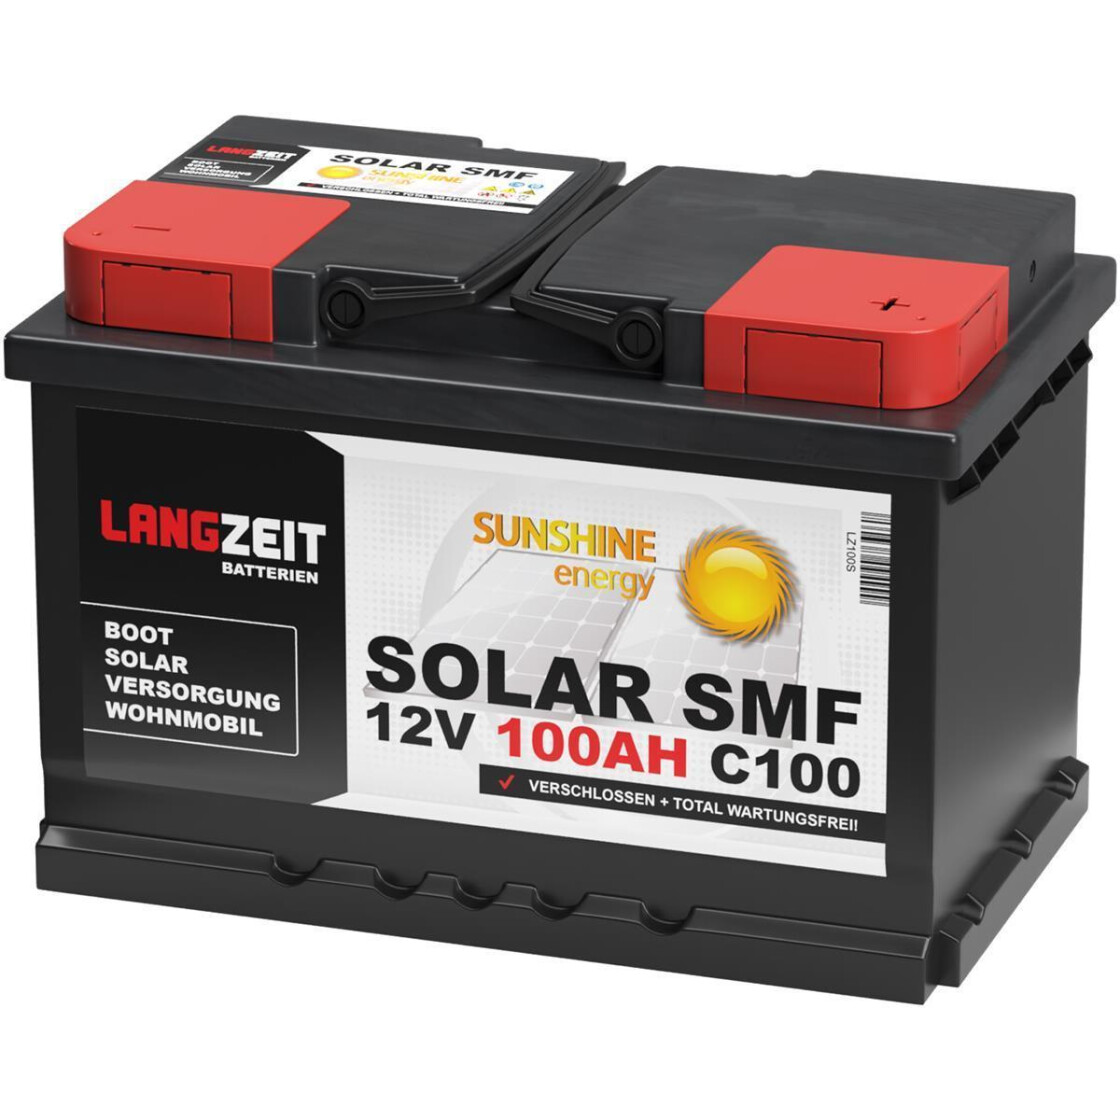 Langzeit Solarbatterie SMF 100Ah 12V, 108,32 €